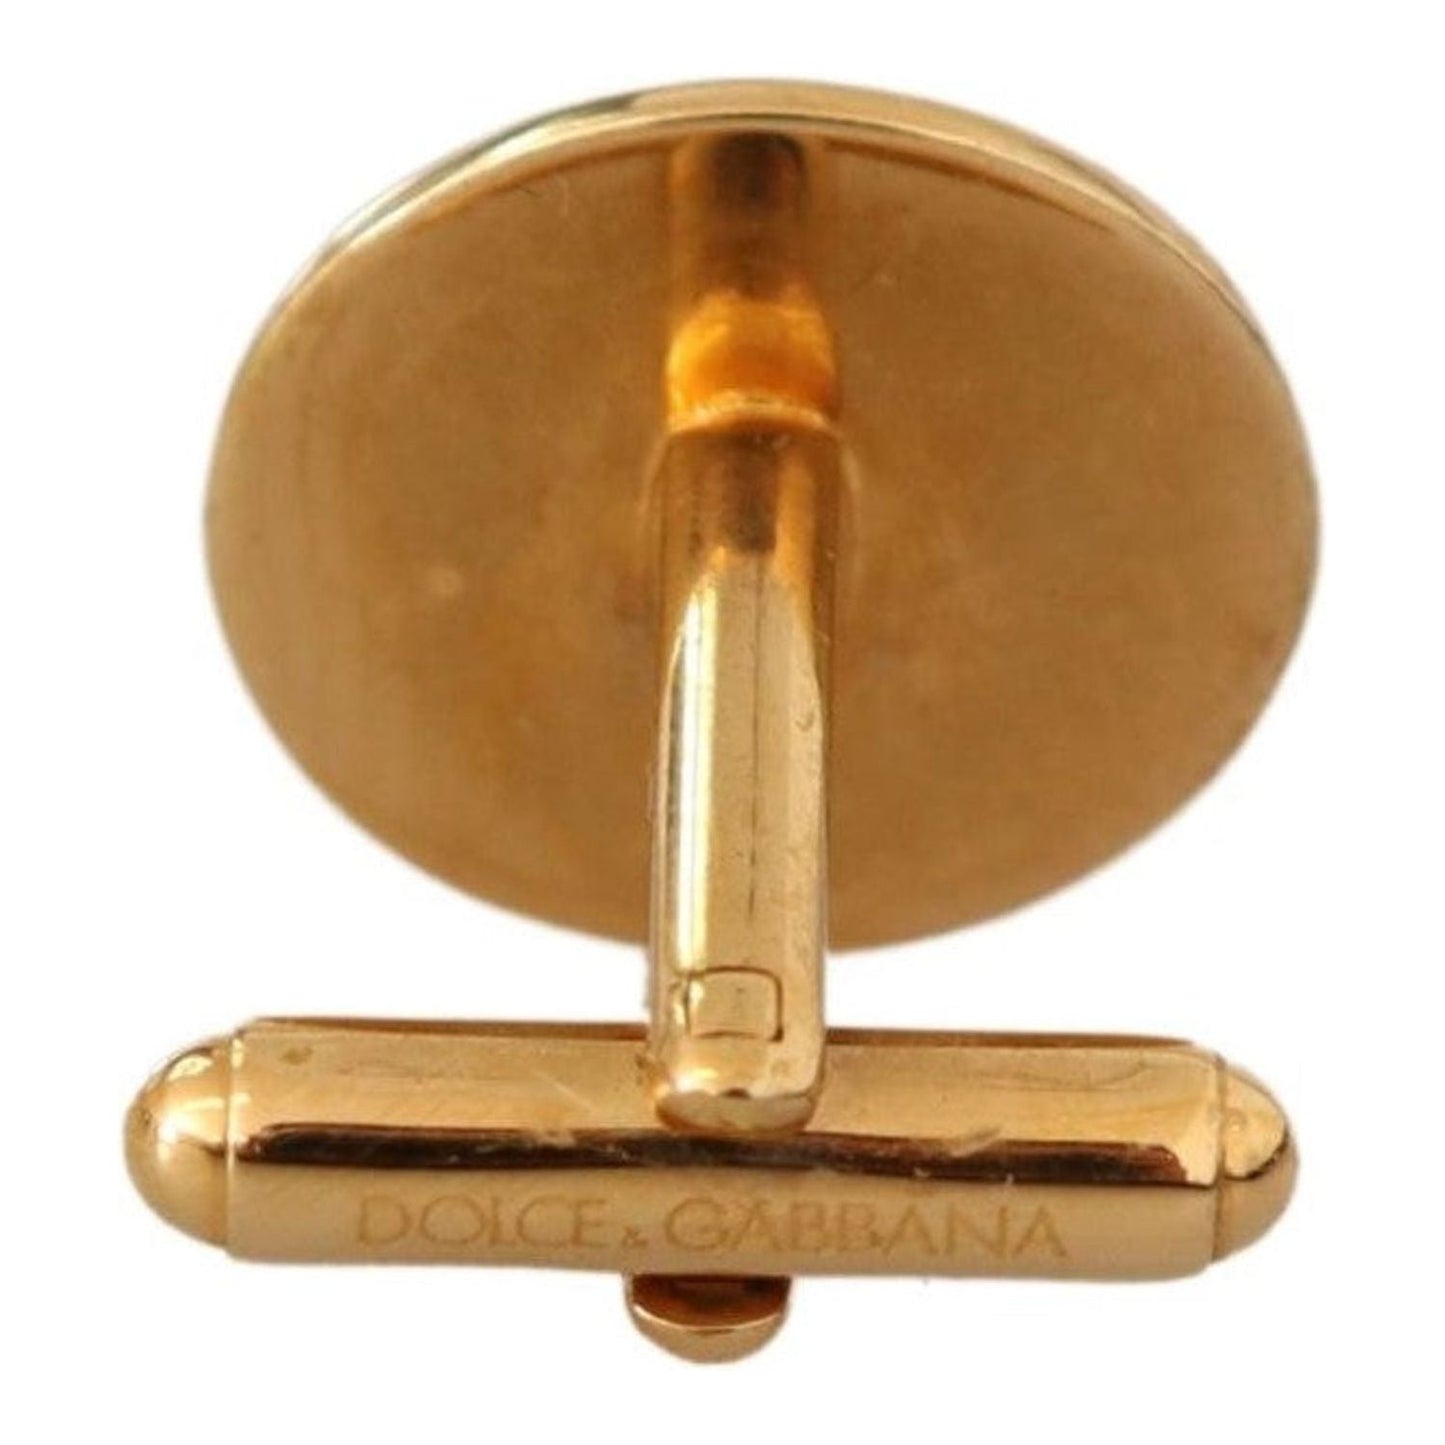 Dolce & Gabbana Elegant Gold-Plated Round Cufflinks gold-plated-brass-round-pin-men-cufflinks-1 Cufflinks IMG_1775-2a3bd27b-47c.jpg